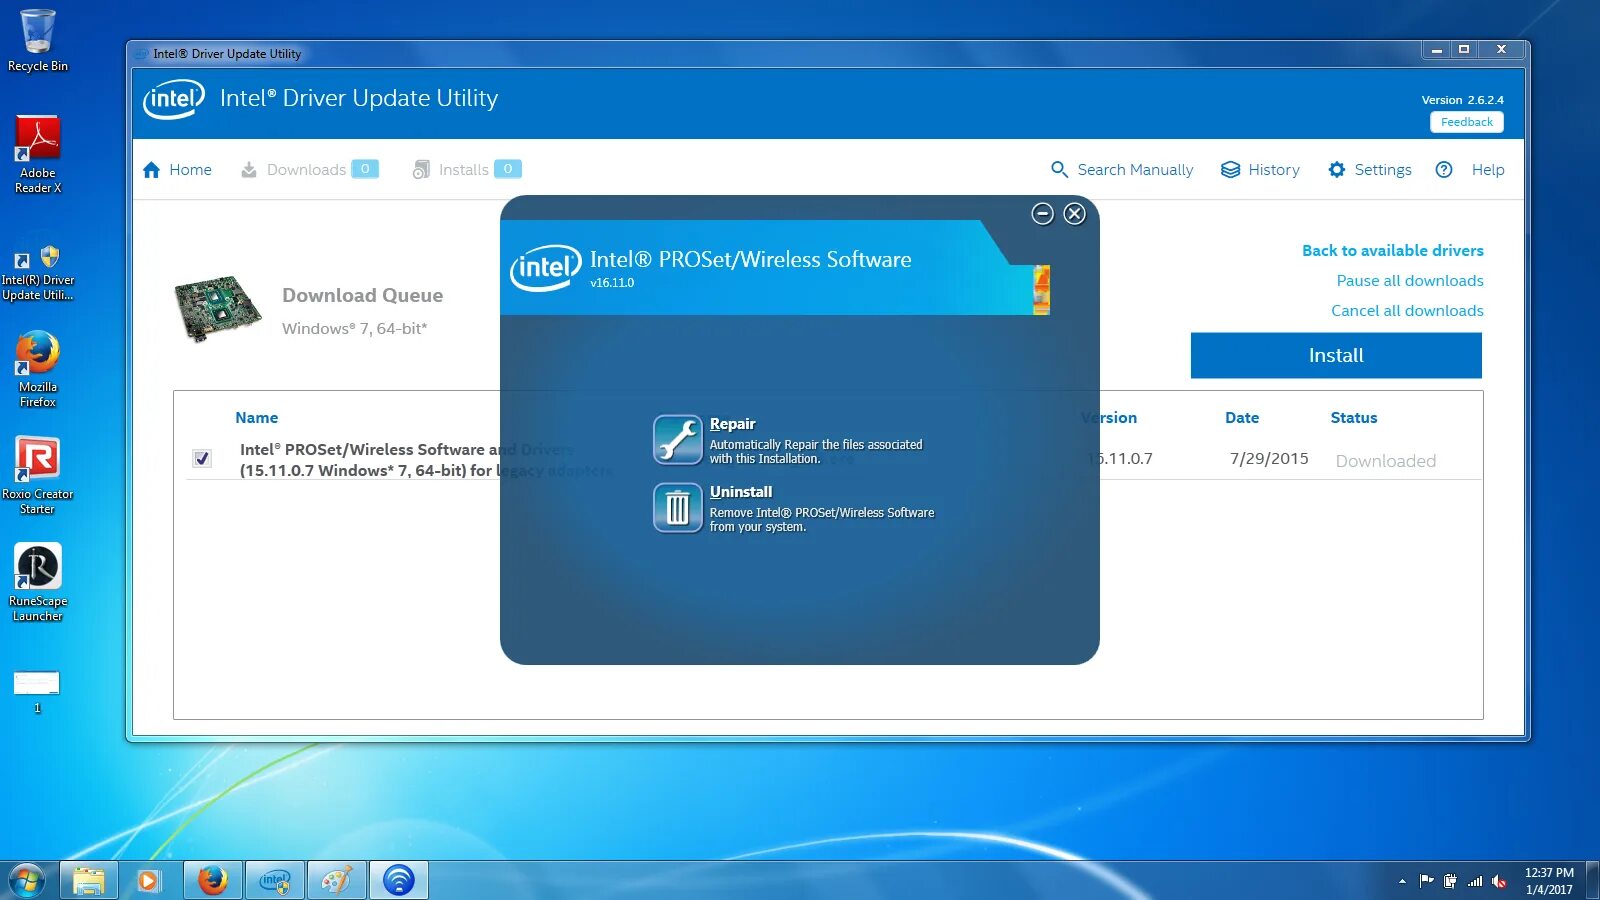 Intel Driver update. Intel Driver последняя версия. Утилита Интел. Intel Driver update Utility installer. Intel оф сайт